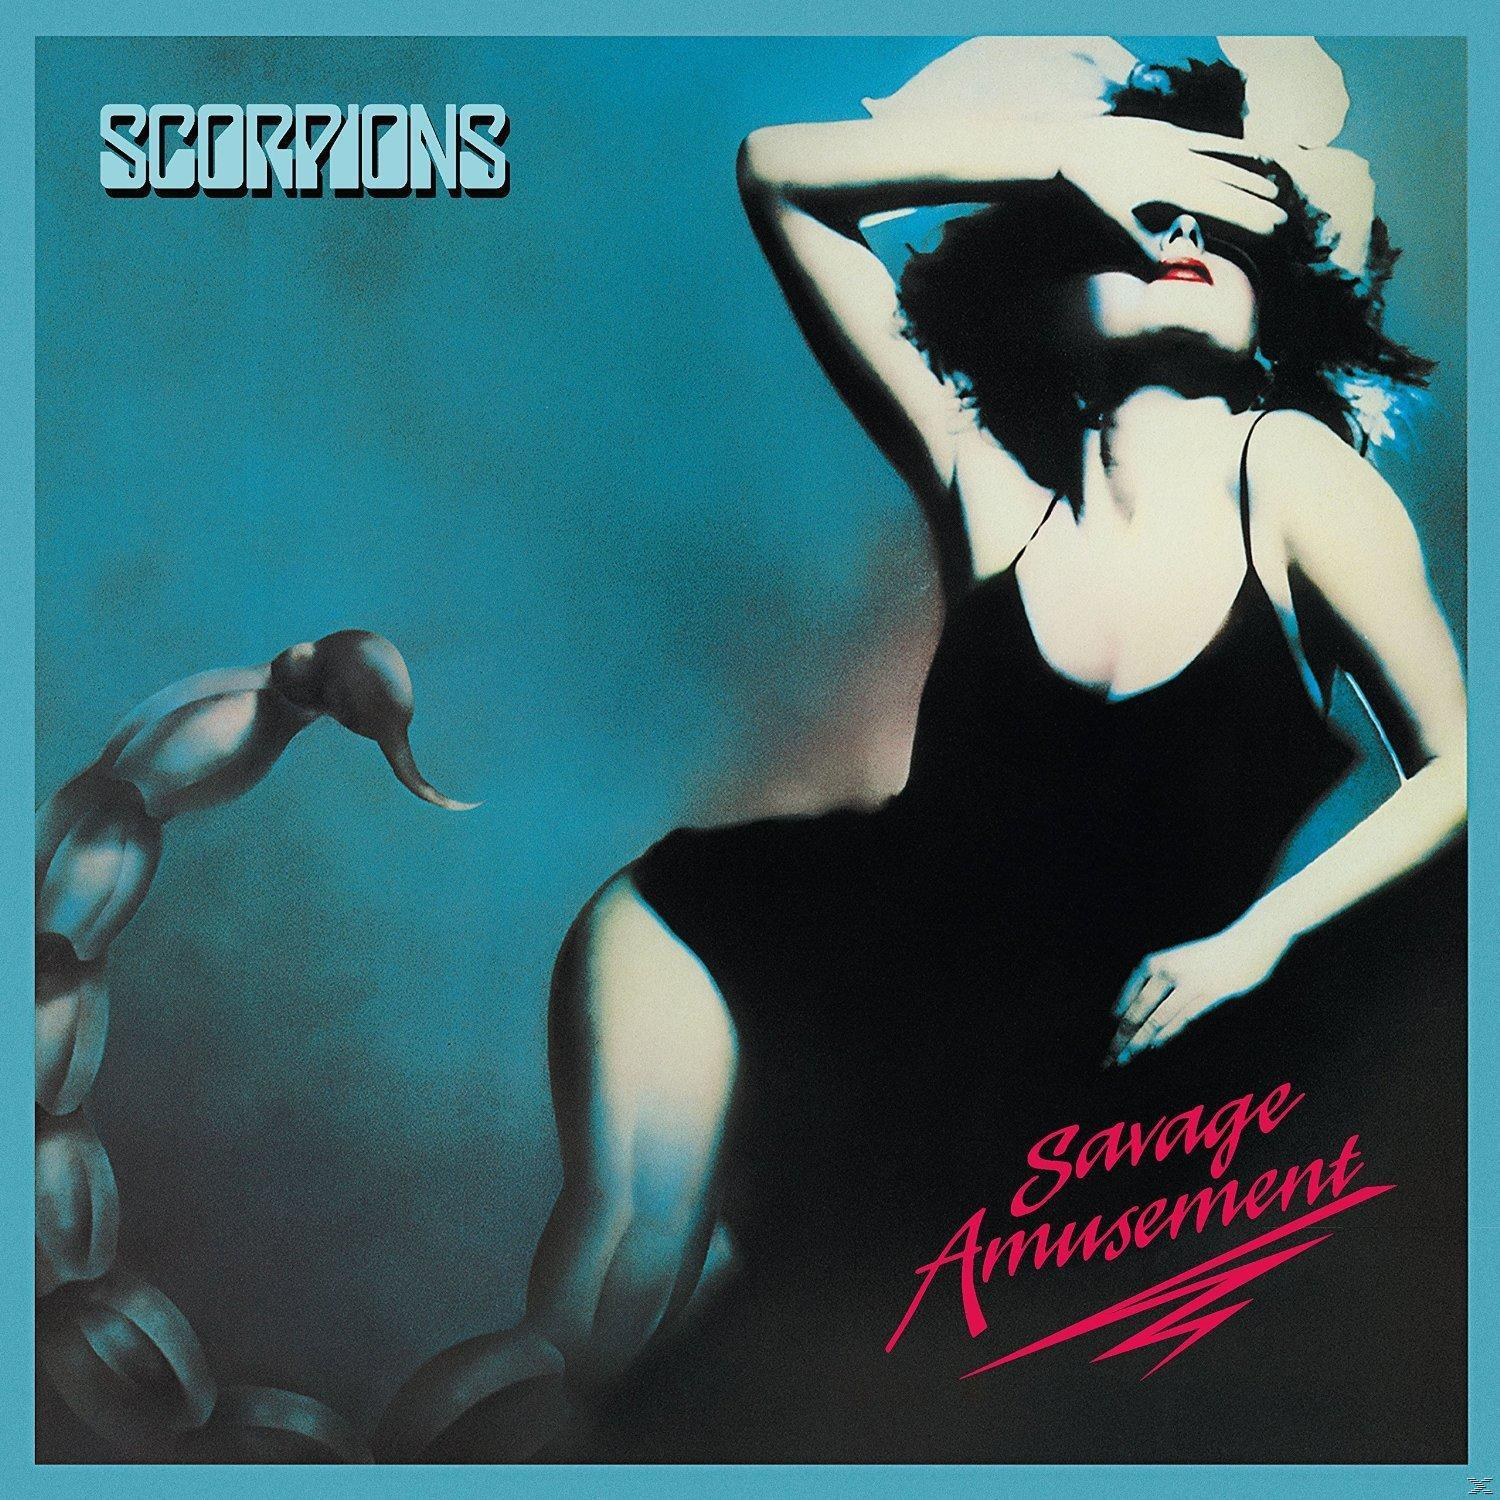 Scorpions - Savage Amusement (50th (CD Edition) DVD Anniversary Deluxe - + Video)